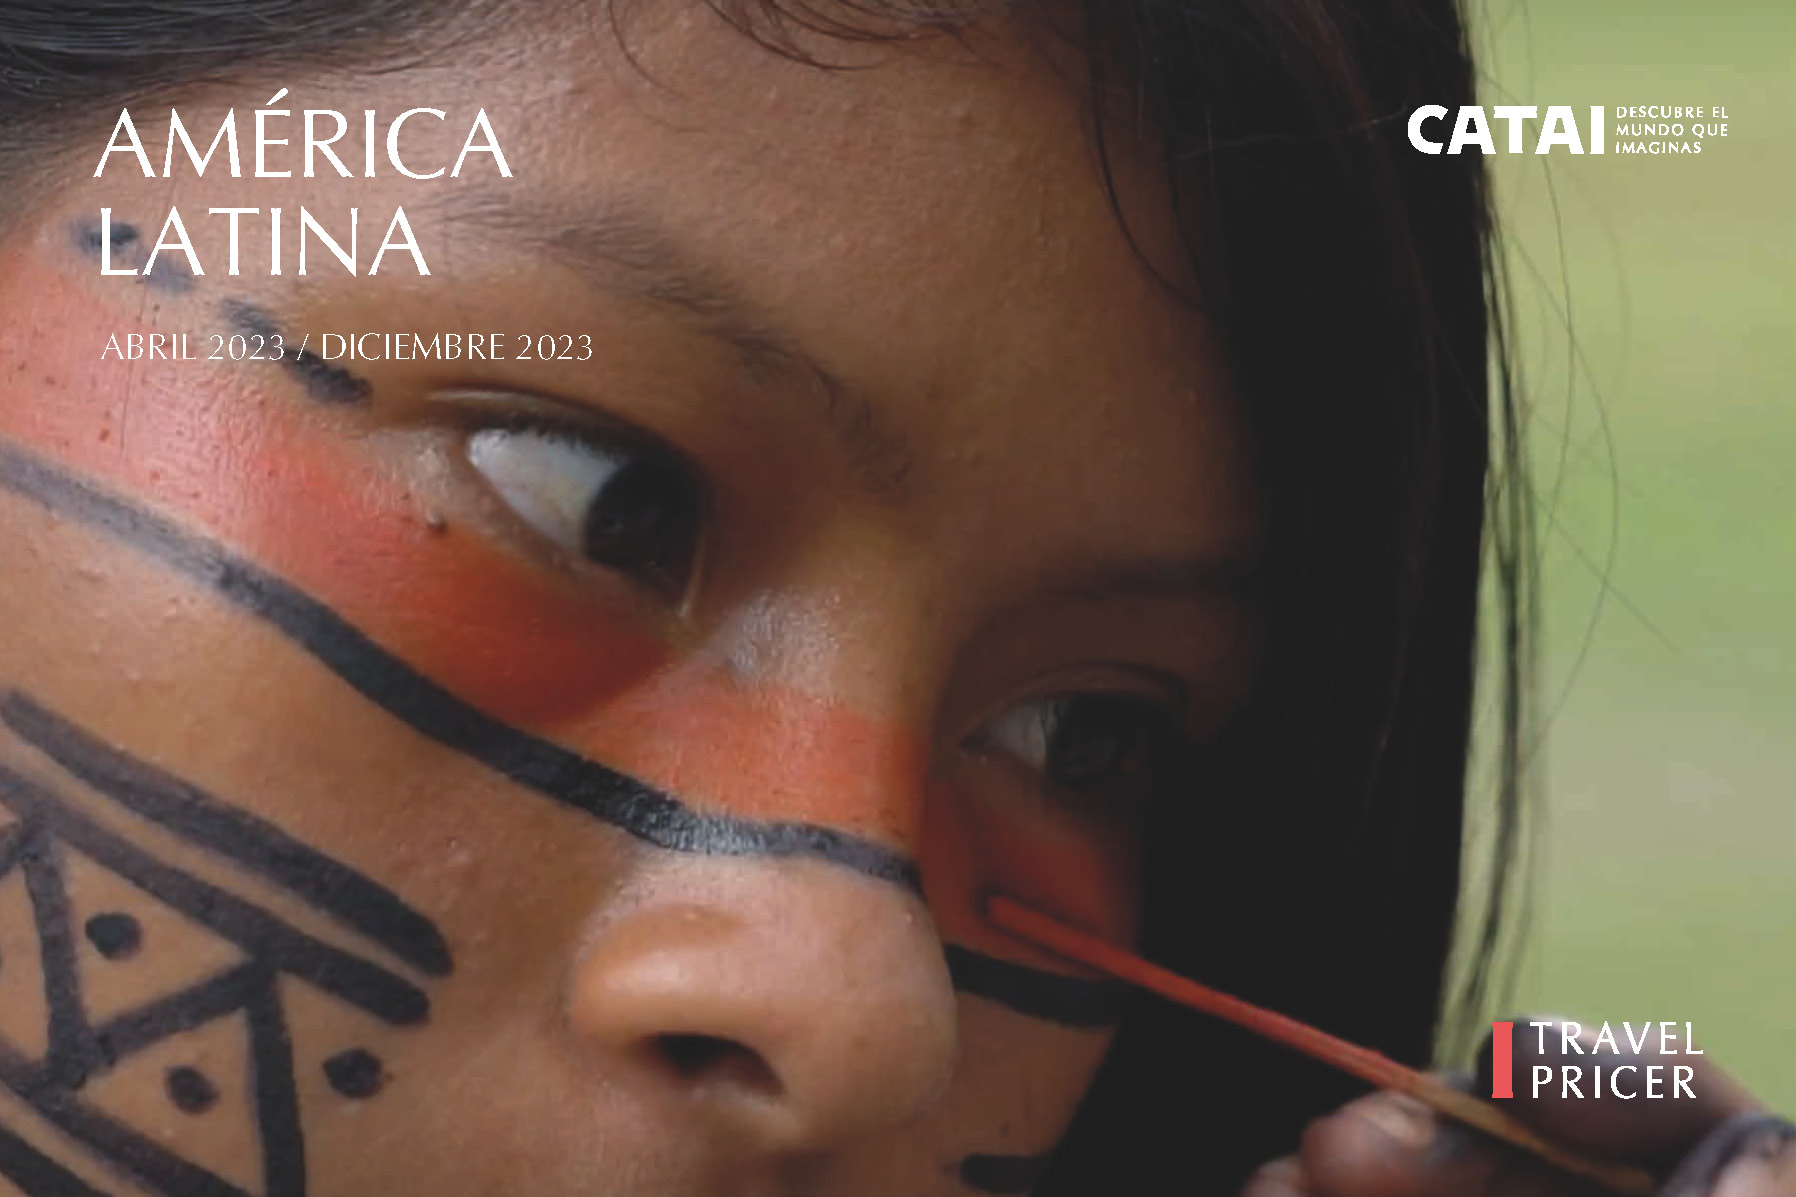 Catalogo Catai America Latina 2023